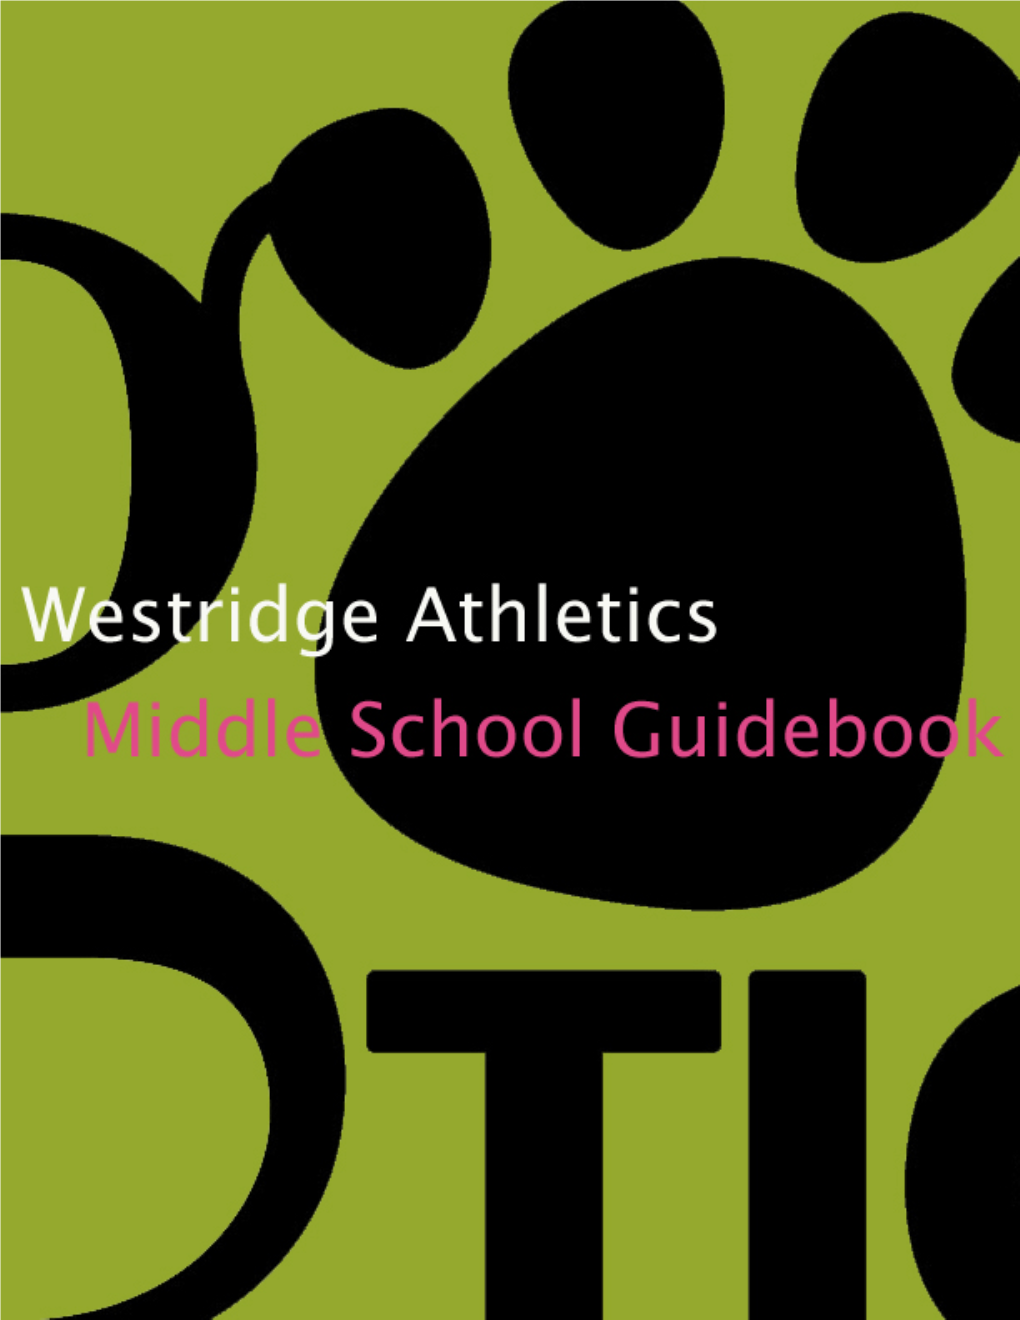 Middle School Athletics Guidebook